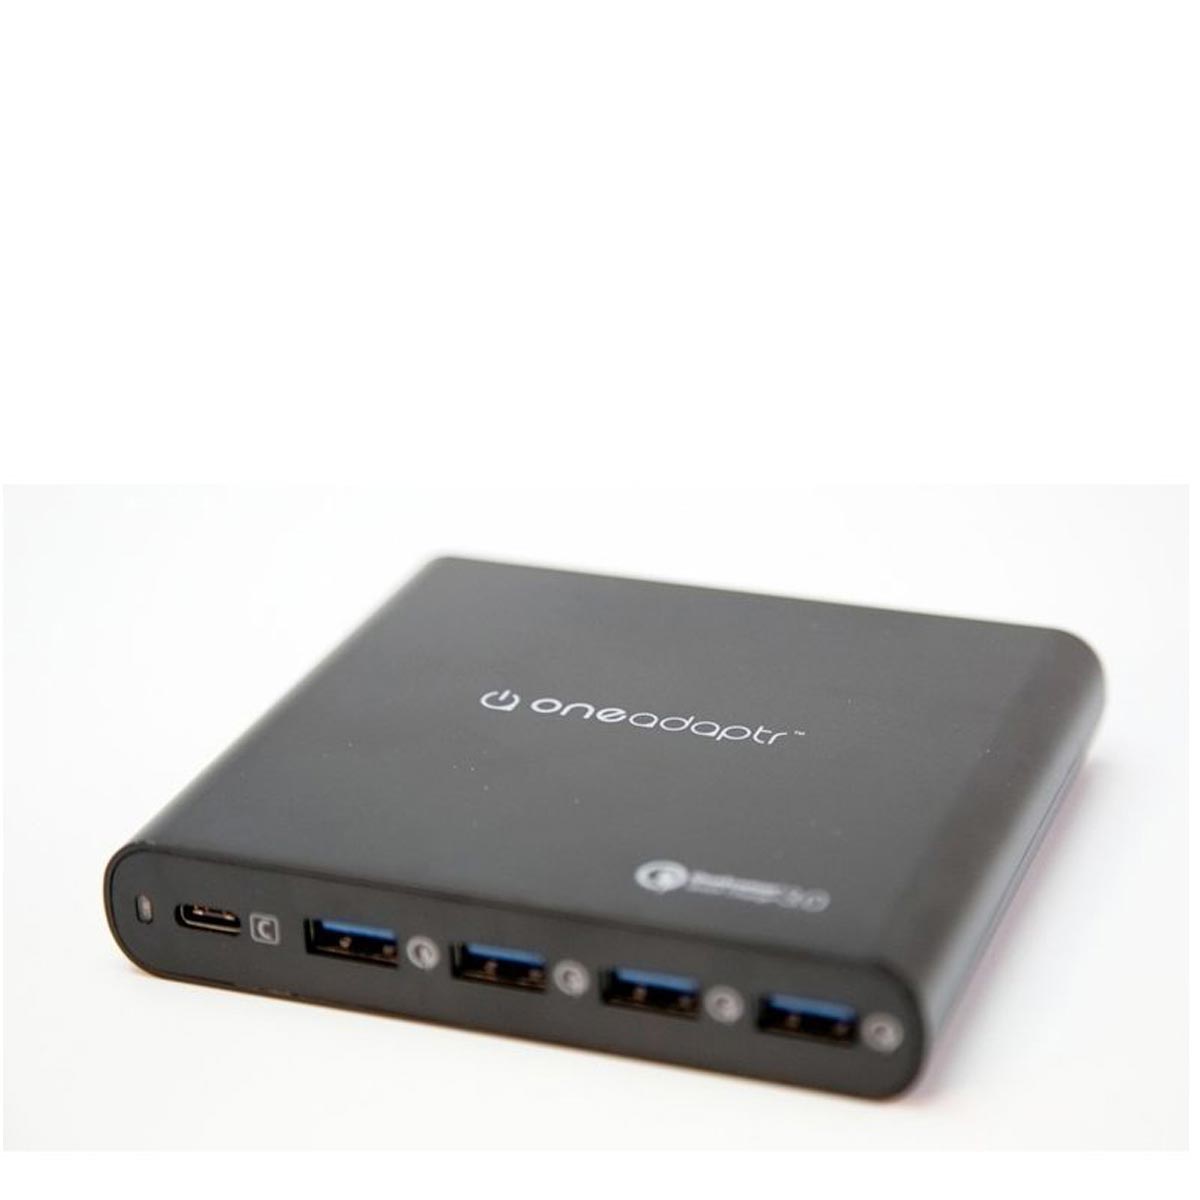 Evri 80W USB-C Charging Station « Blog